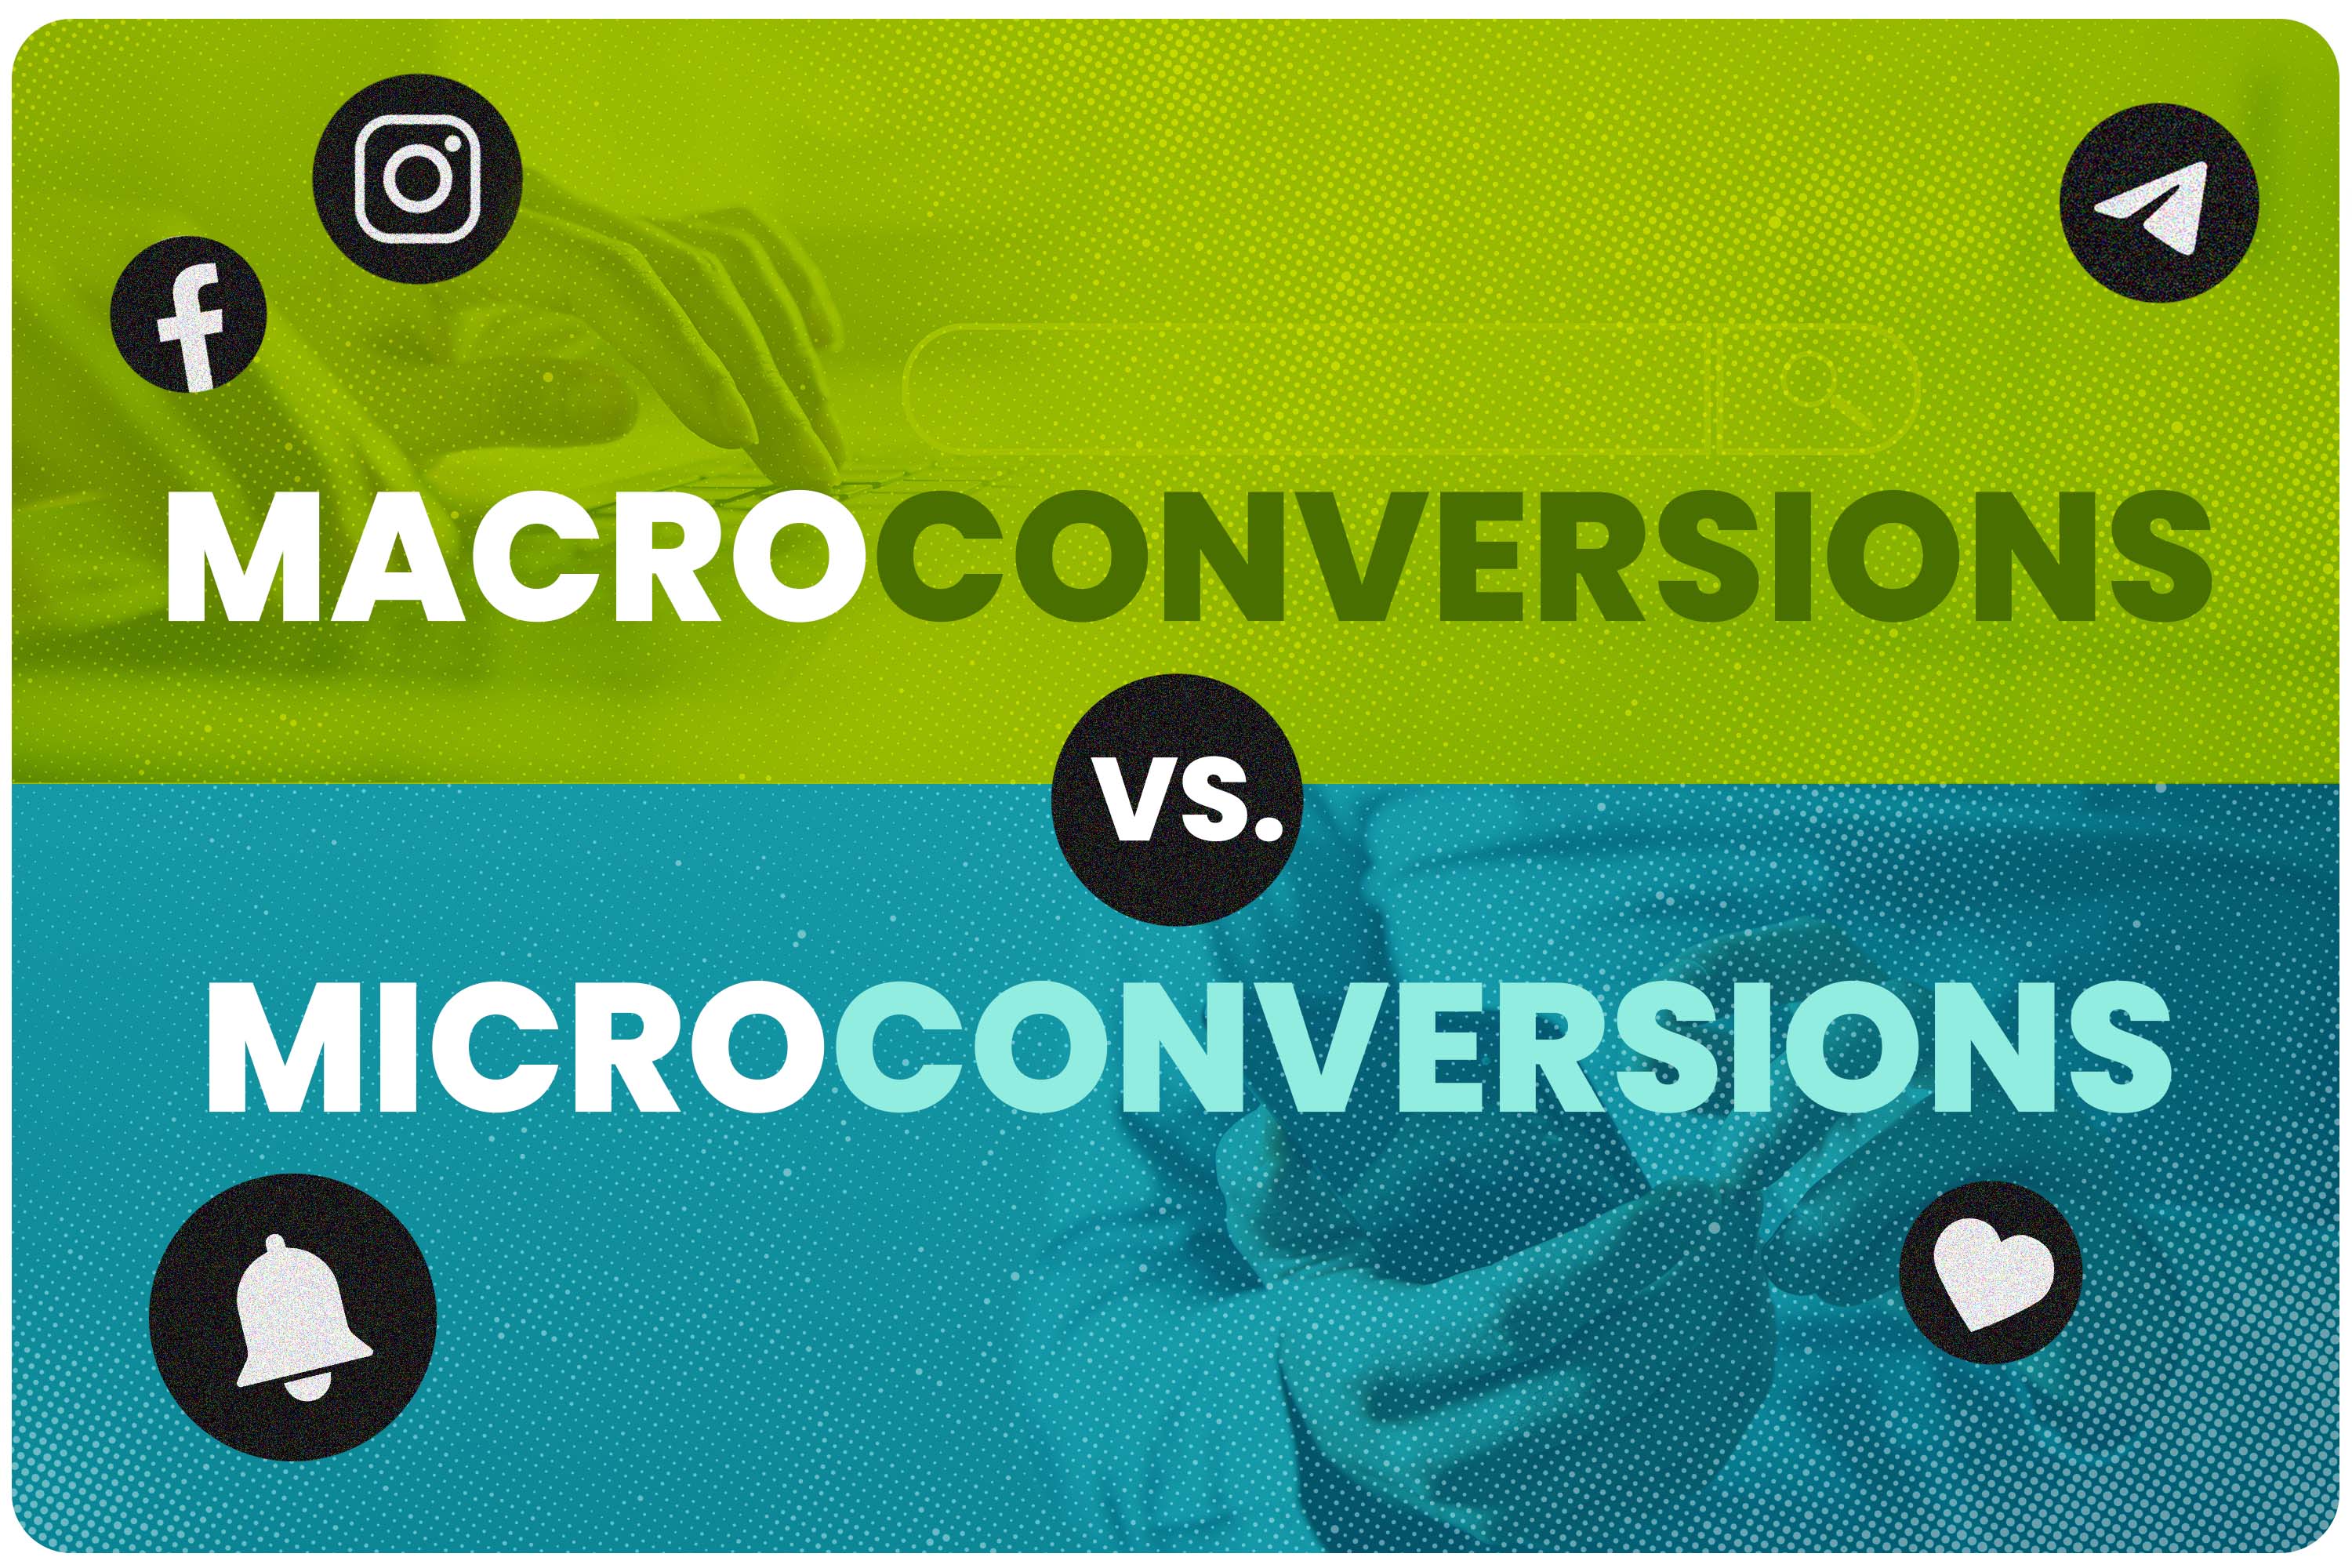 Macroconversions vs. Microconversions